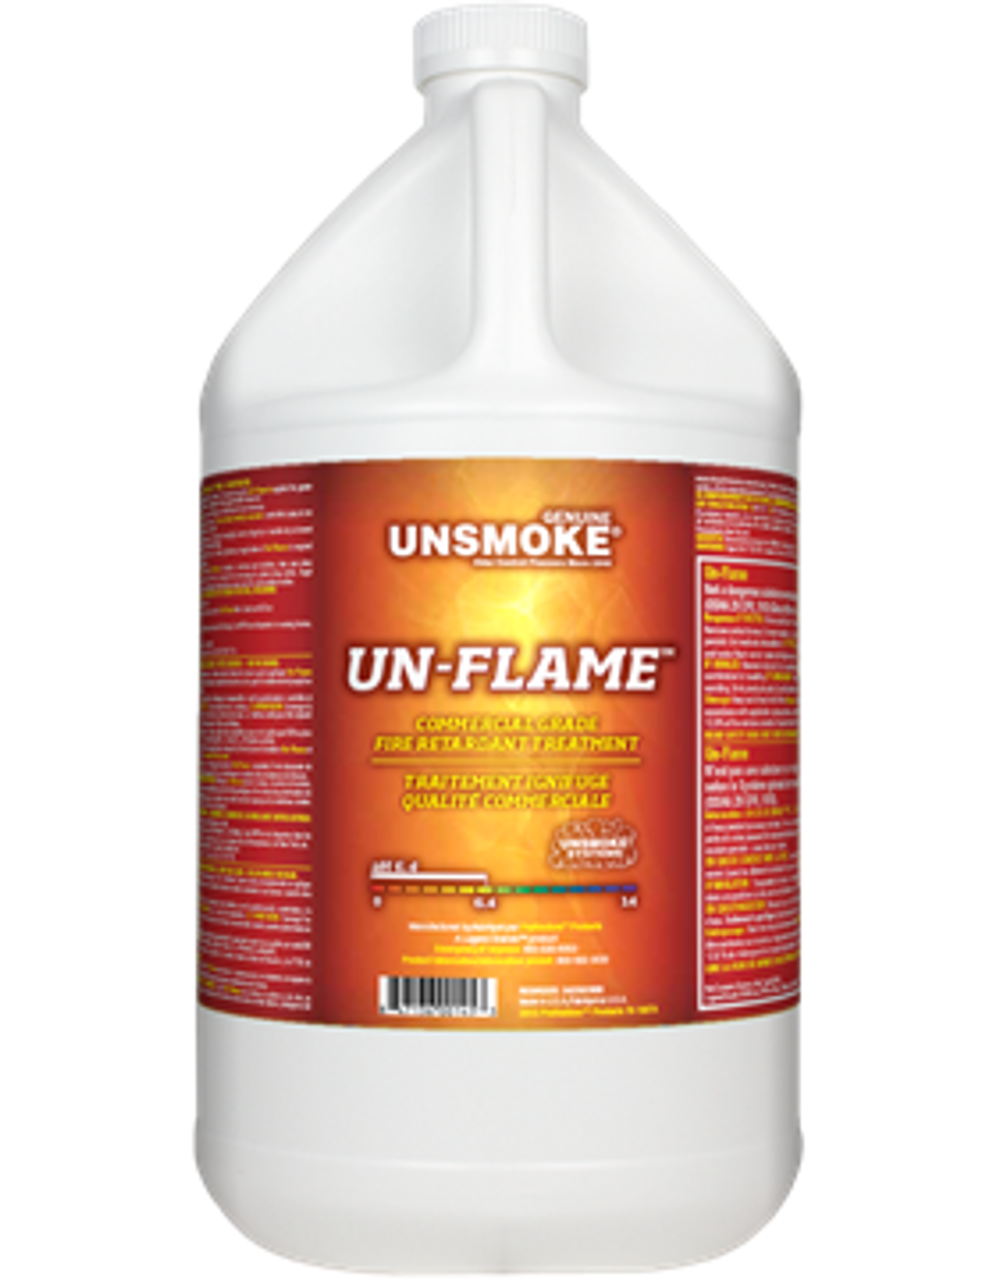 Unsmoke Un-Flame Commercial Grade Fire Retardant Treatment - 1gal - CASE of 4ea